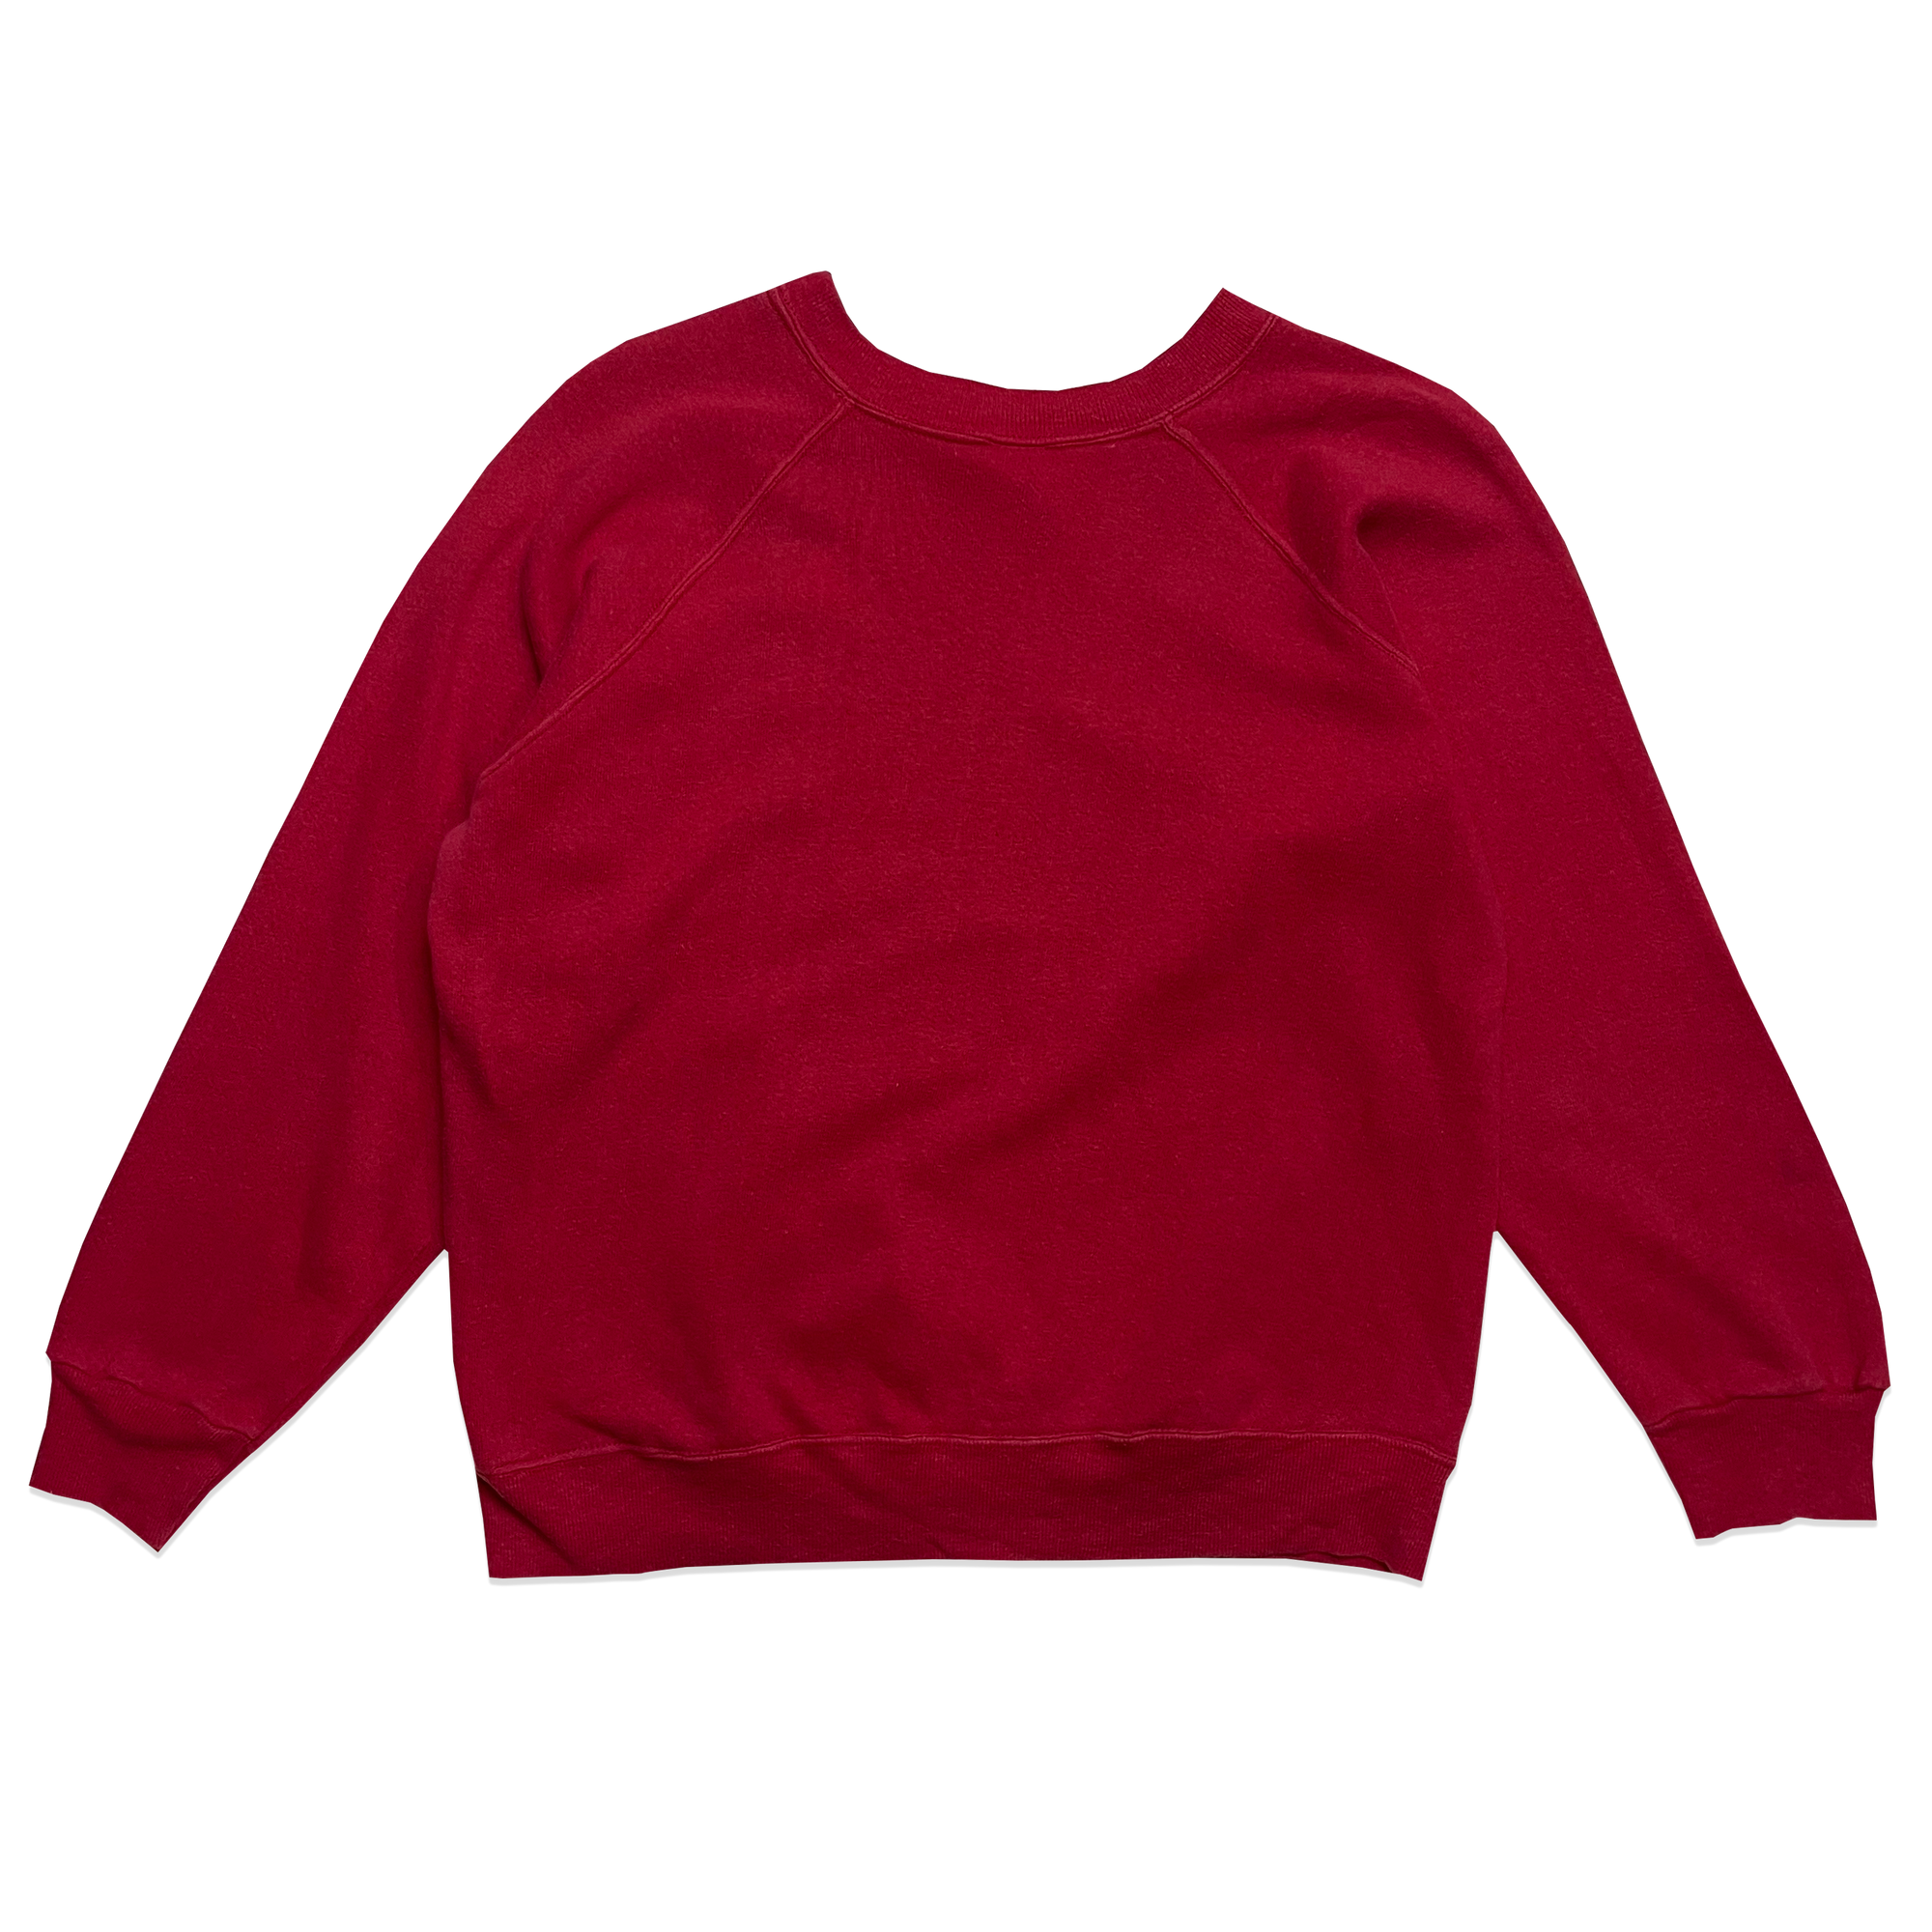 Sweatshirt - Snoopy - Rouge